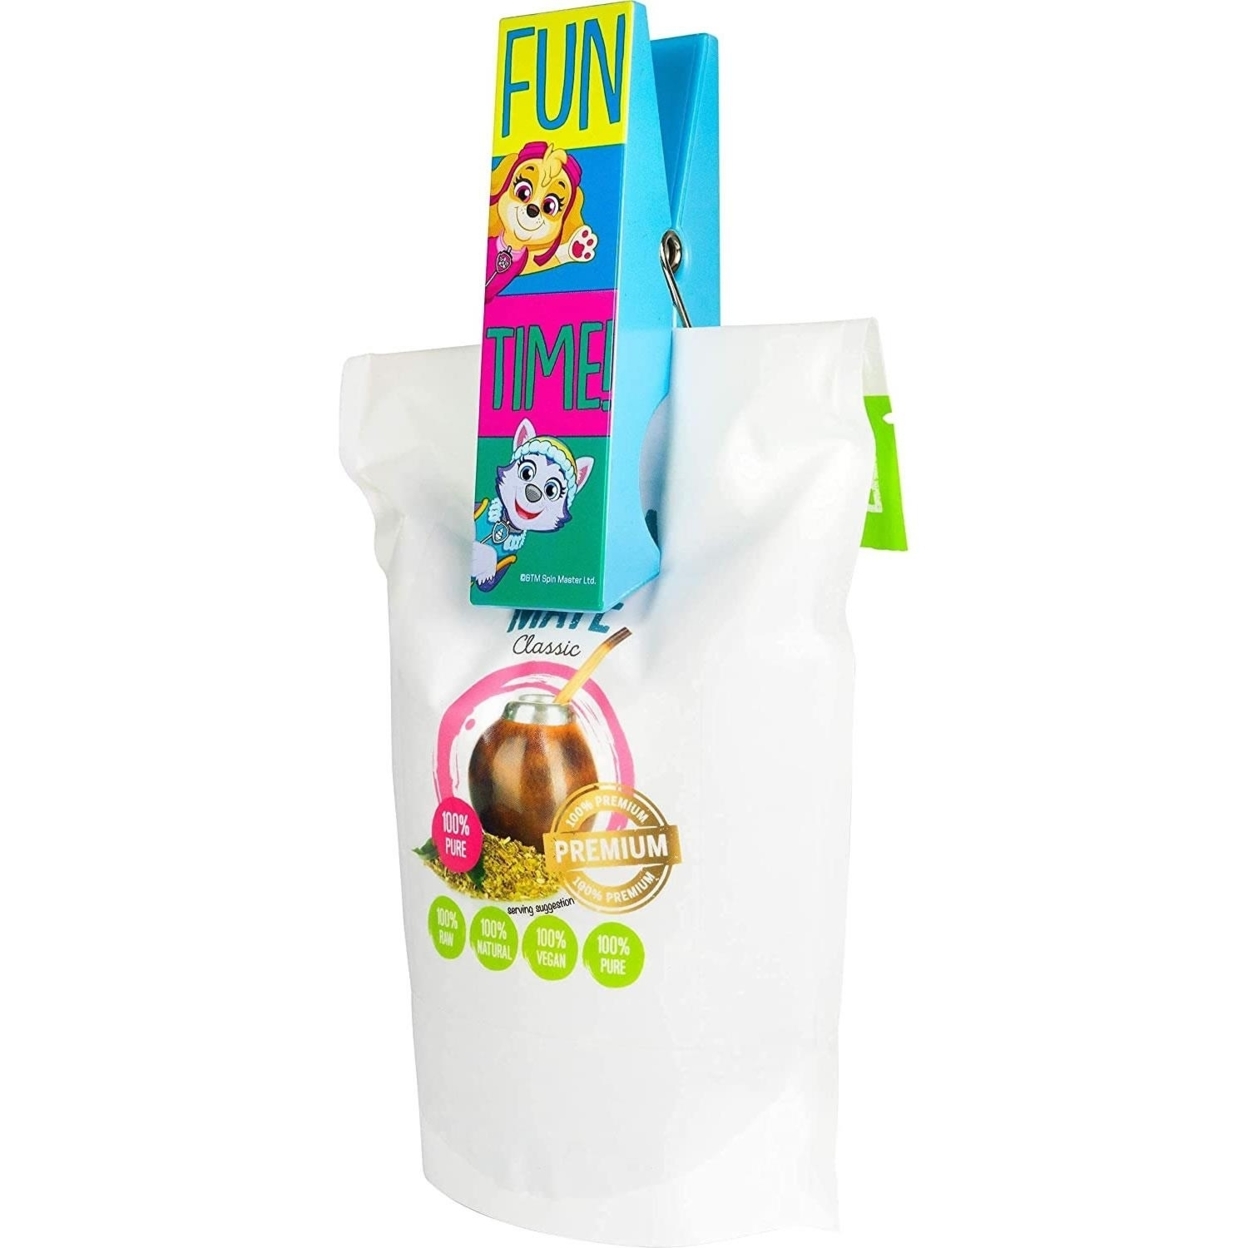 Paw Patrol Beach Towel Clips Sun Fun Time Nickelodeon Pool Secure Bag Chair LogoPegs